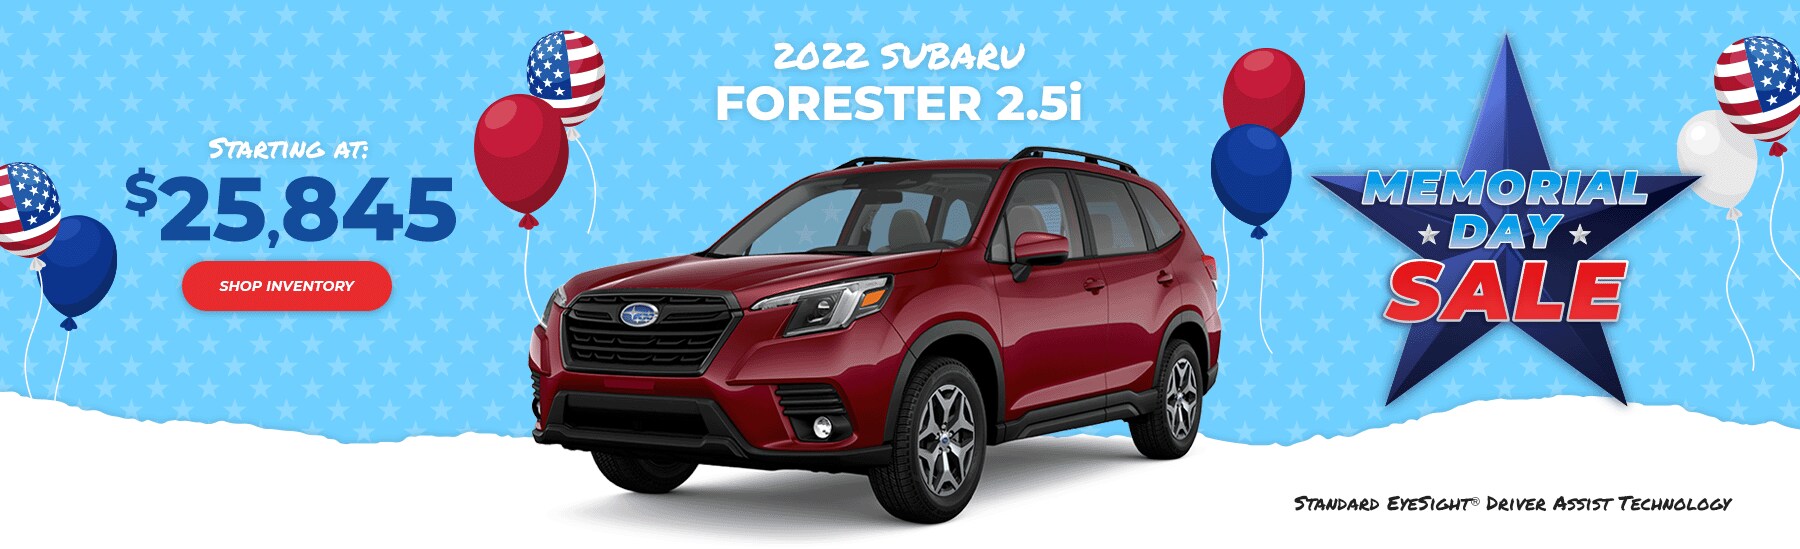 2022 Subaru Forester 2.5i